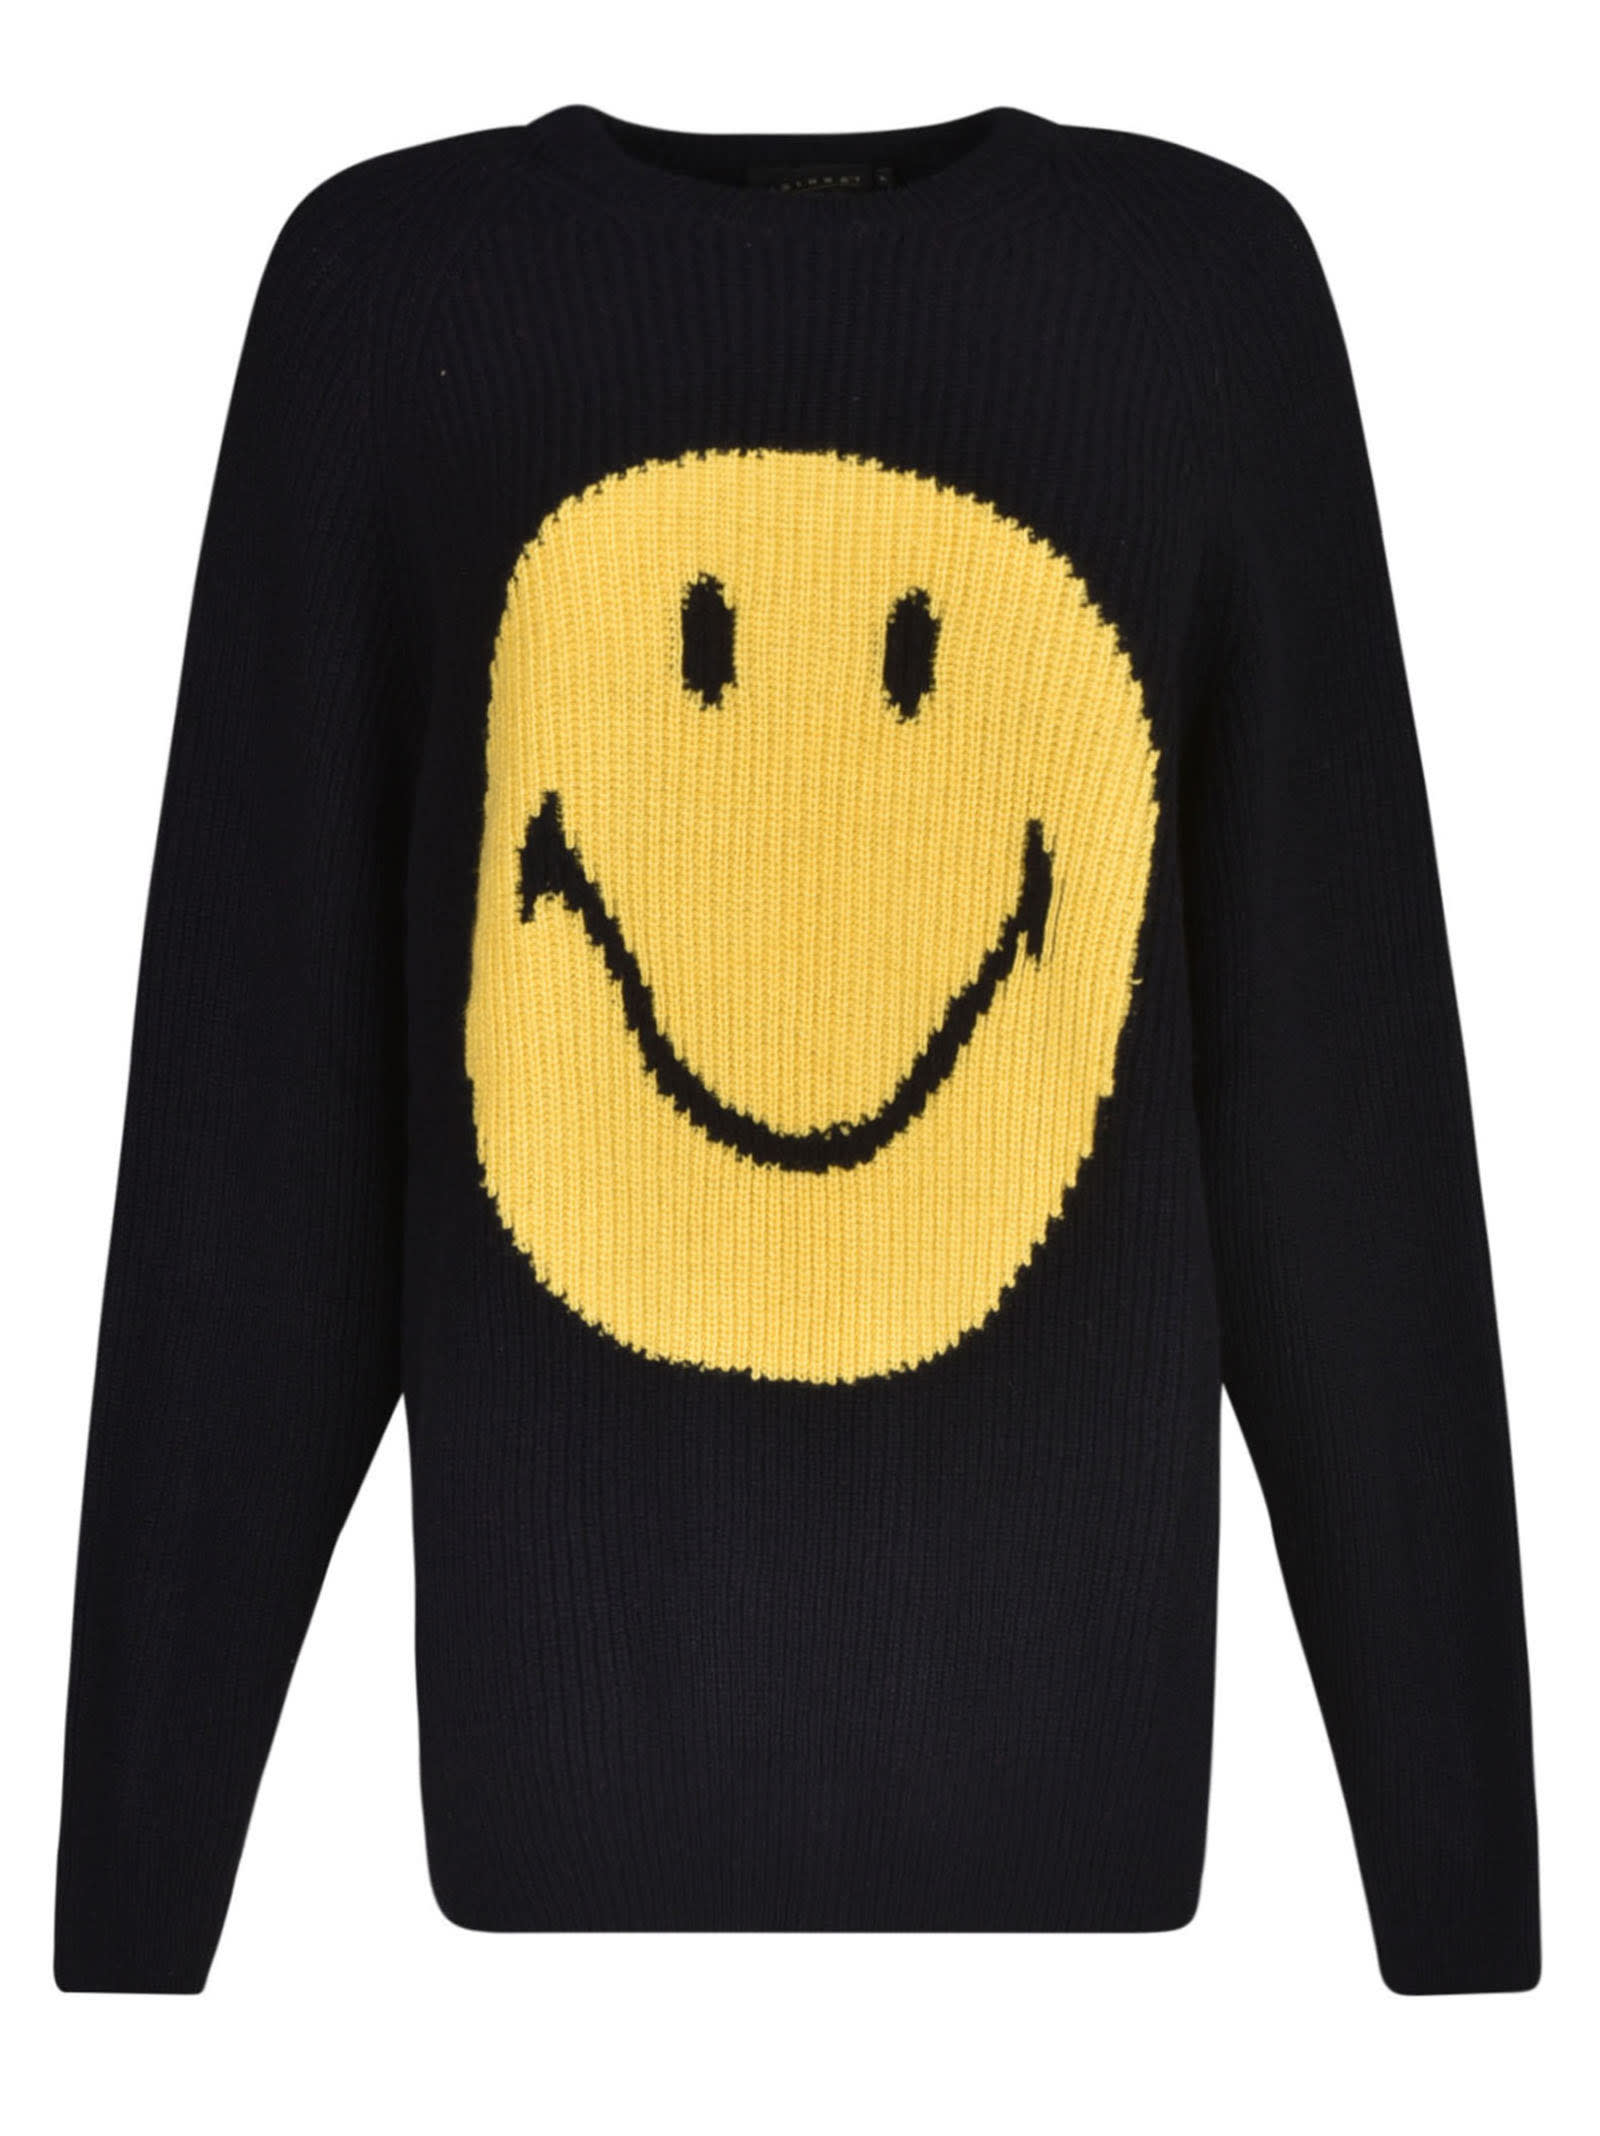 Joshua Sanders Raglan Smiley Sweater